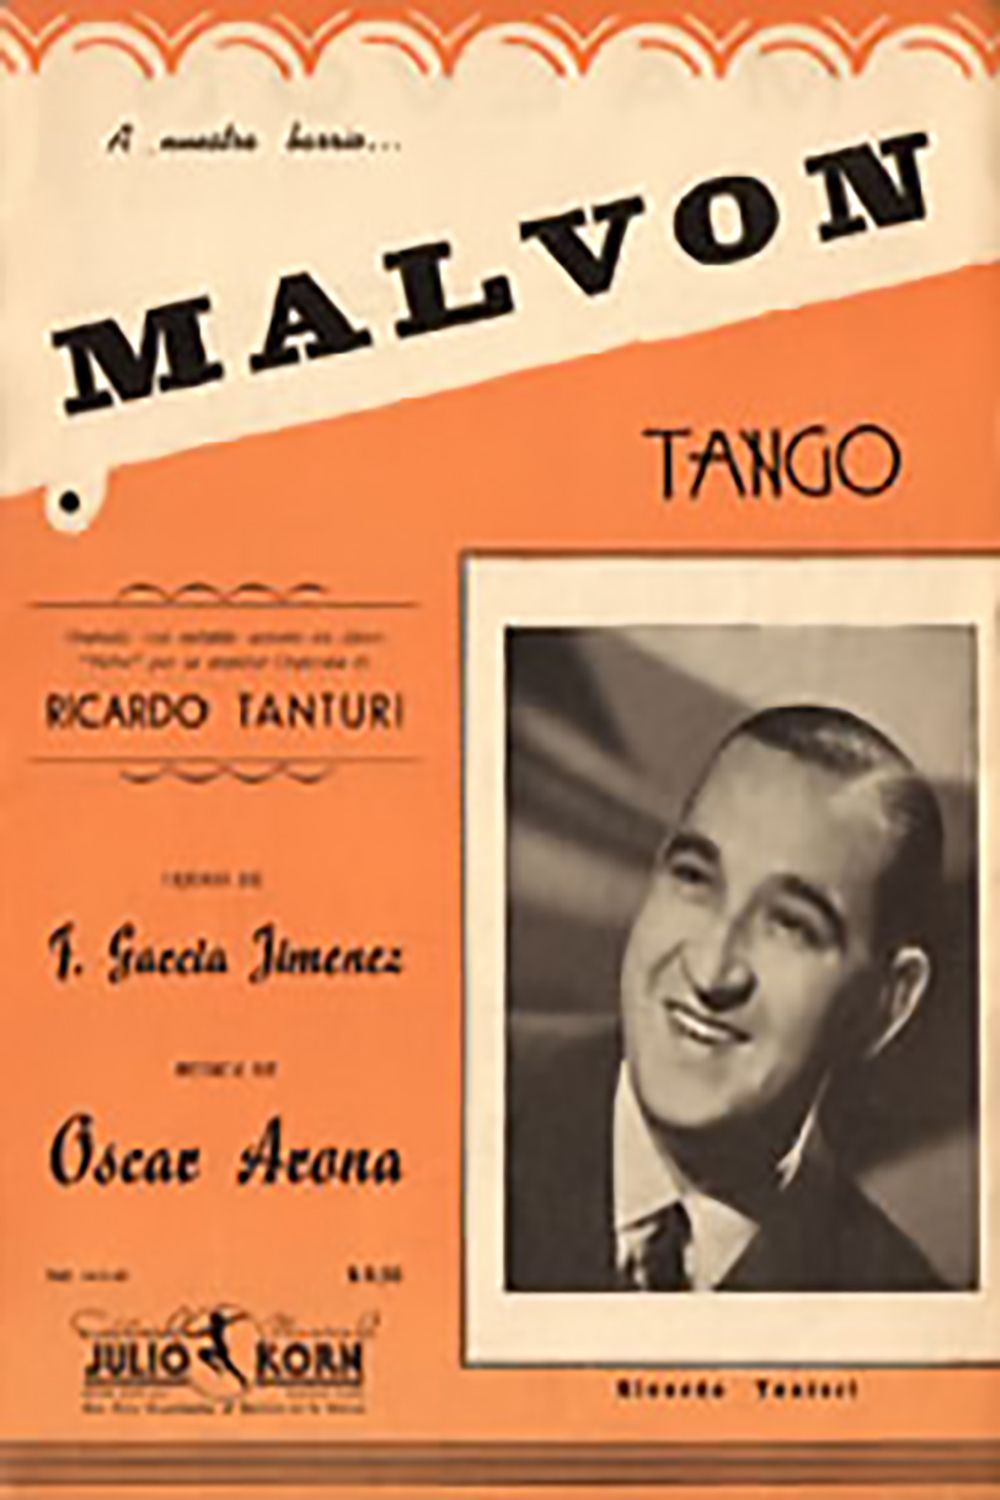 "Malvón", Argentine Tango music sheet cover.